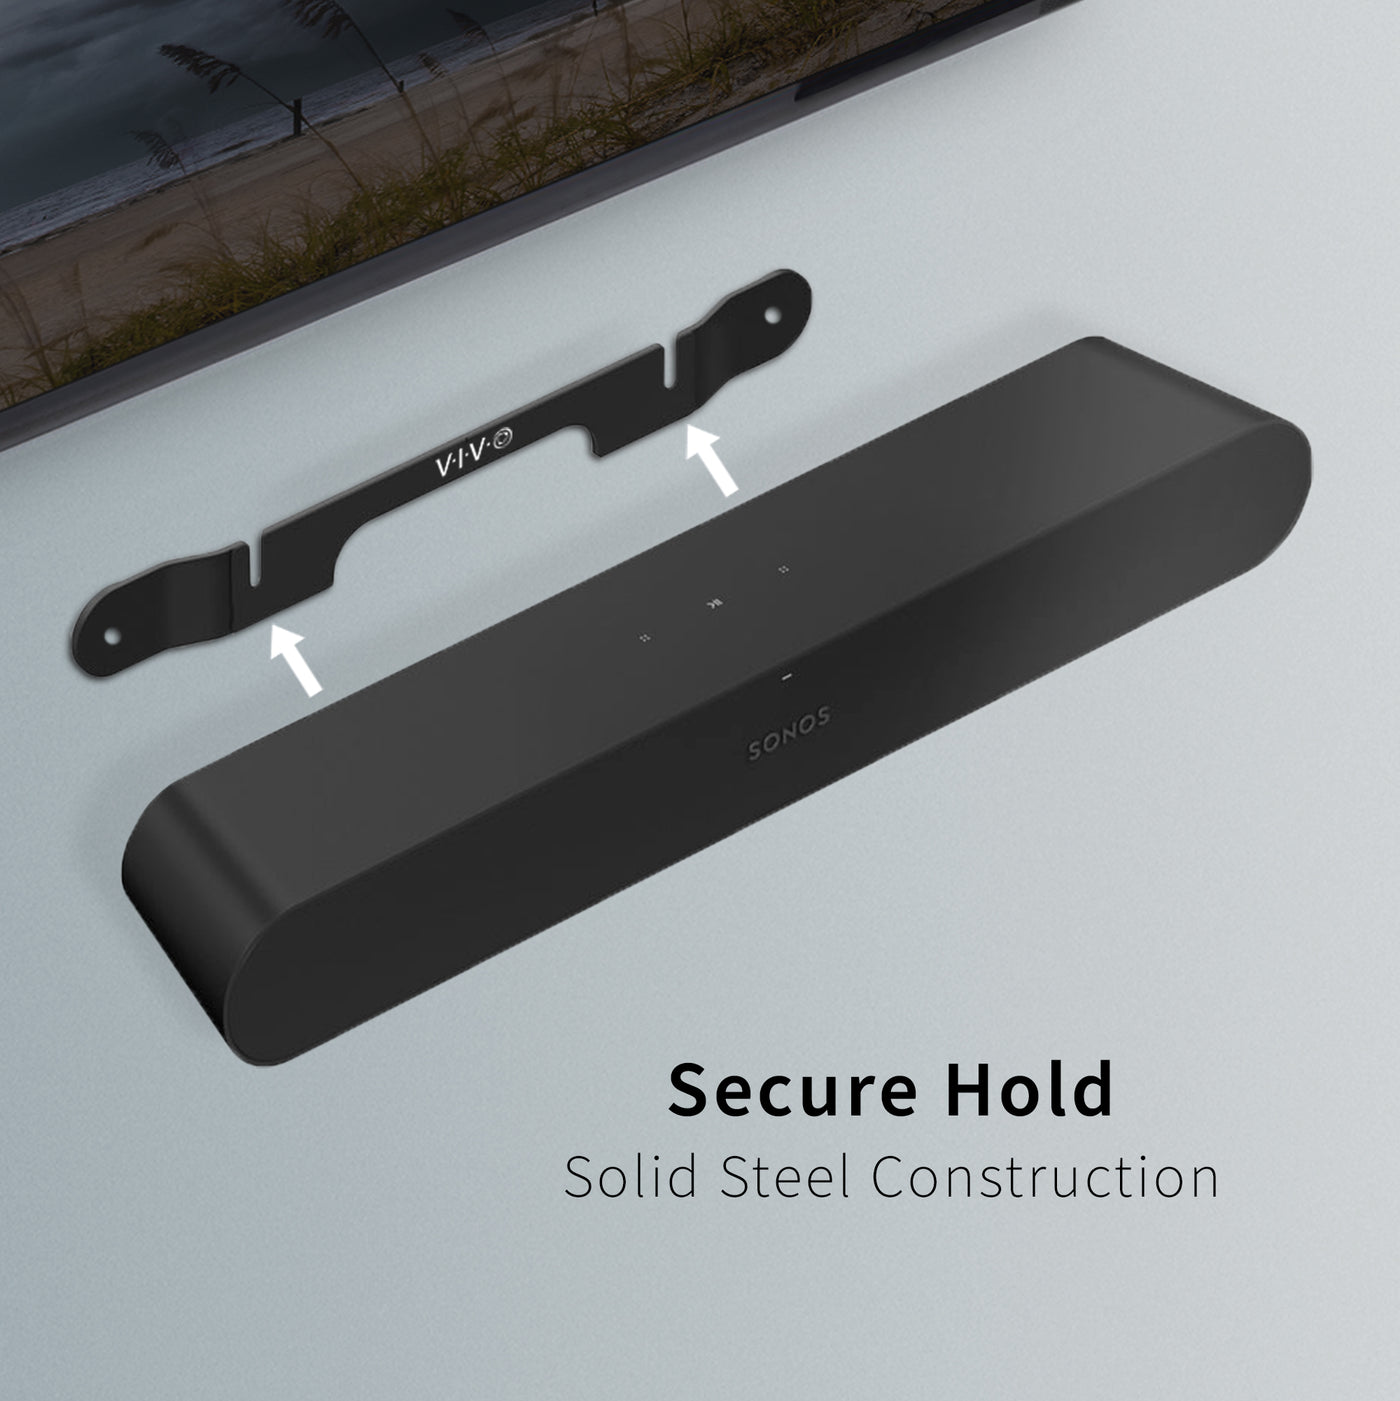 Solid steel wall mount bracket attachment for Sonos Ray Soundbar.